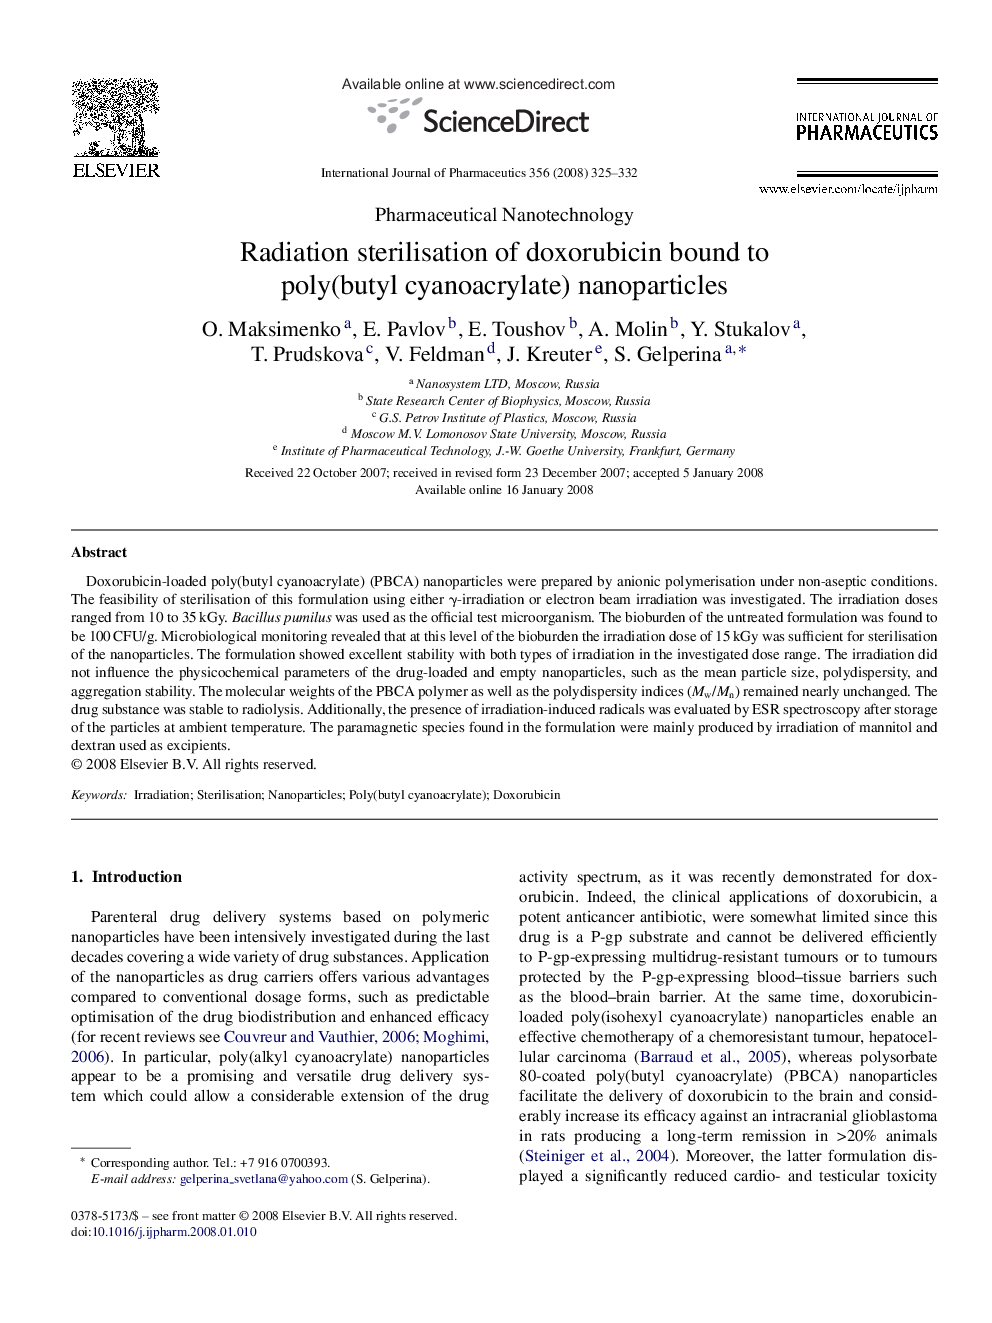 Radiation sterilisation of doxorubicin bound to poly(butyl cyanoacrylate) nanoparticles